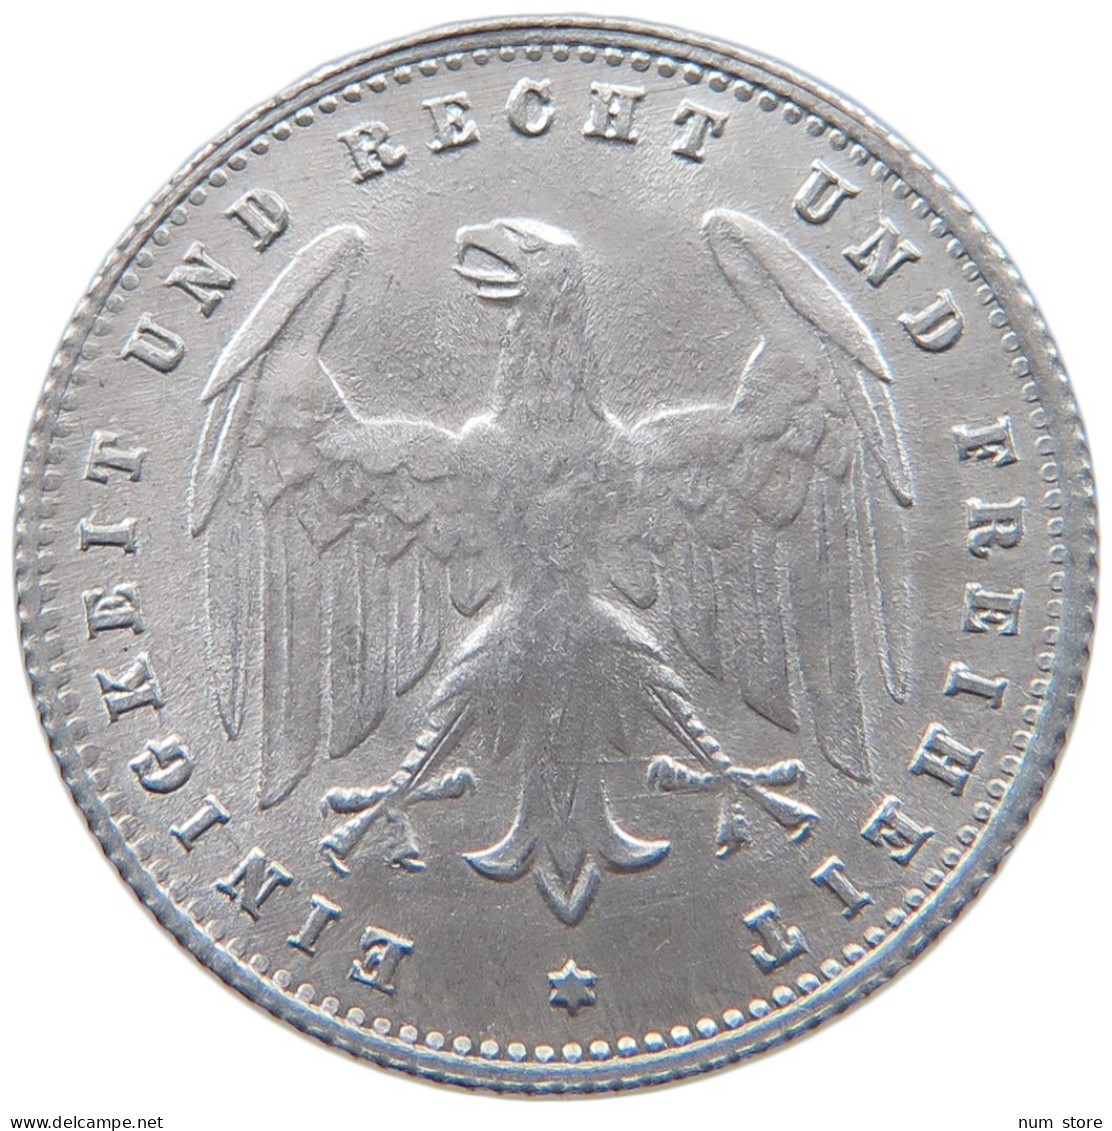 WEIMARER REPUBLIK 200 MARK 1923 G  #MA 098770 - 200 & 500 Mark